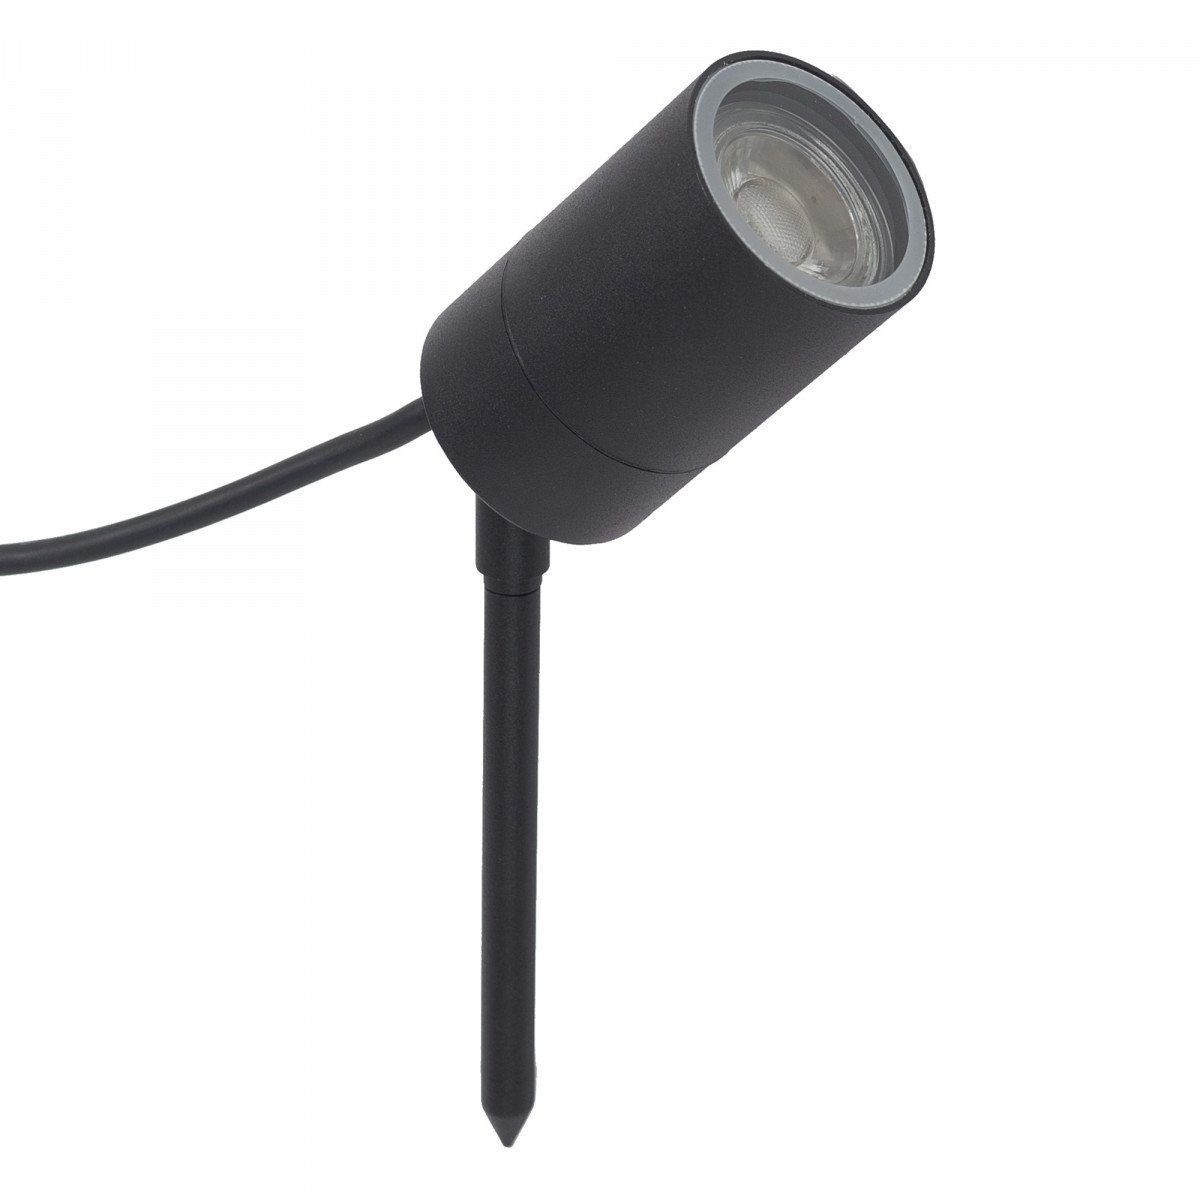 Spot de jardin LED Pin - Plug & Play KS Lighting, s'achète chez Nostalux